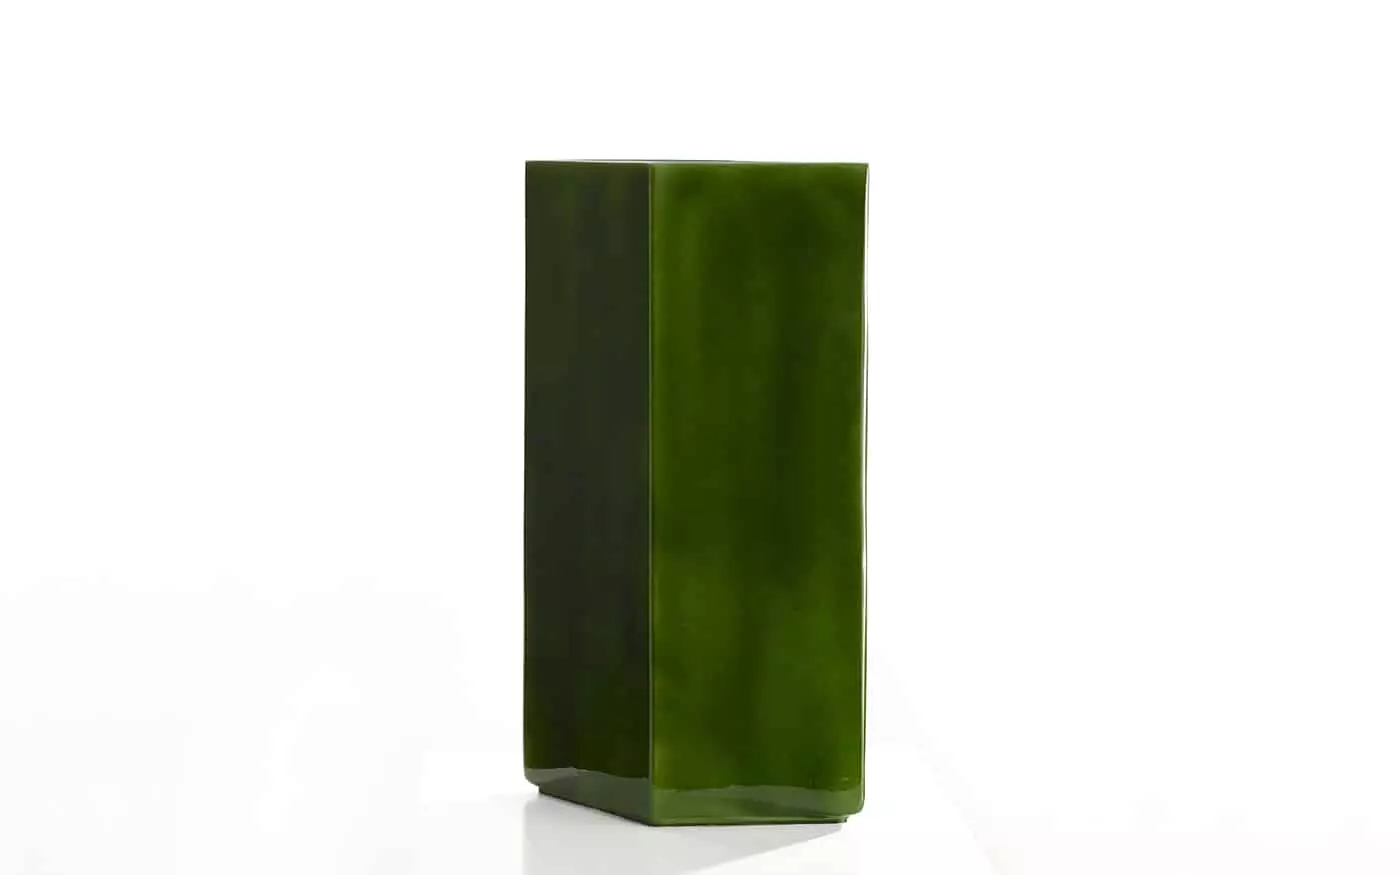 Vase Losange 84 green - Ronan & Erwan Bouroullec - Shelf - Galerie kreo